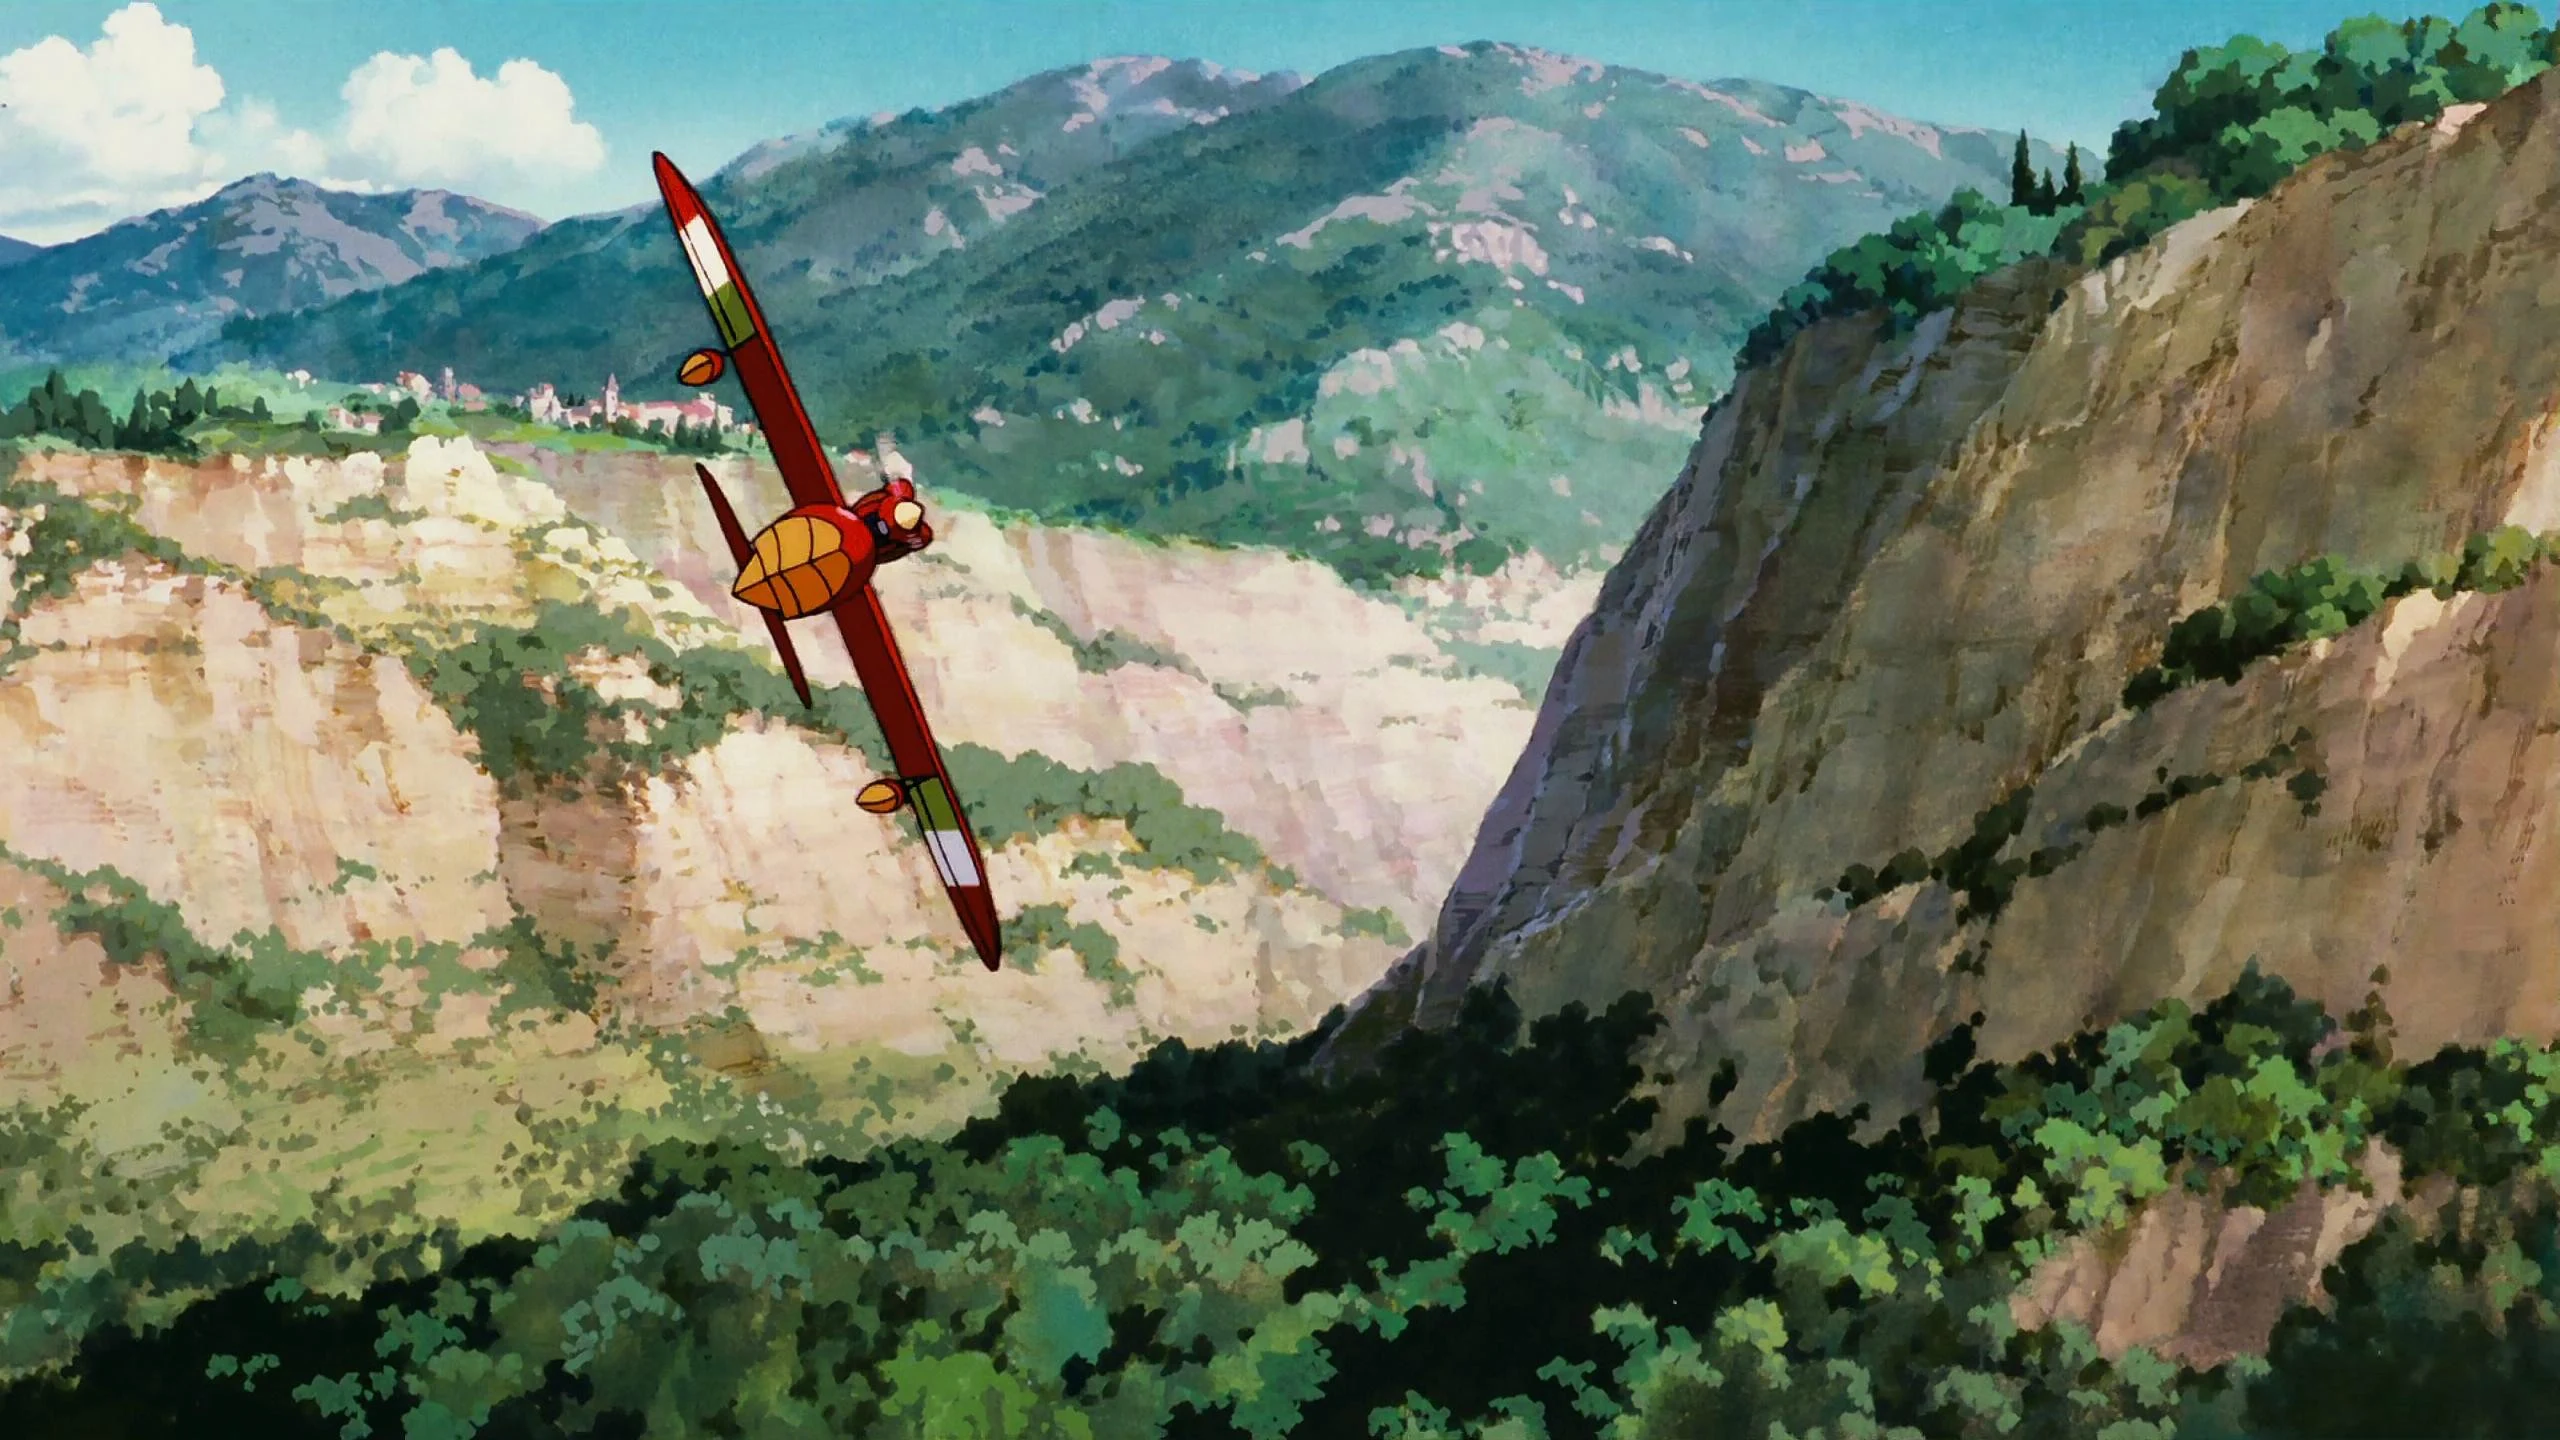 Beautiful Studio Ghibli Image